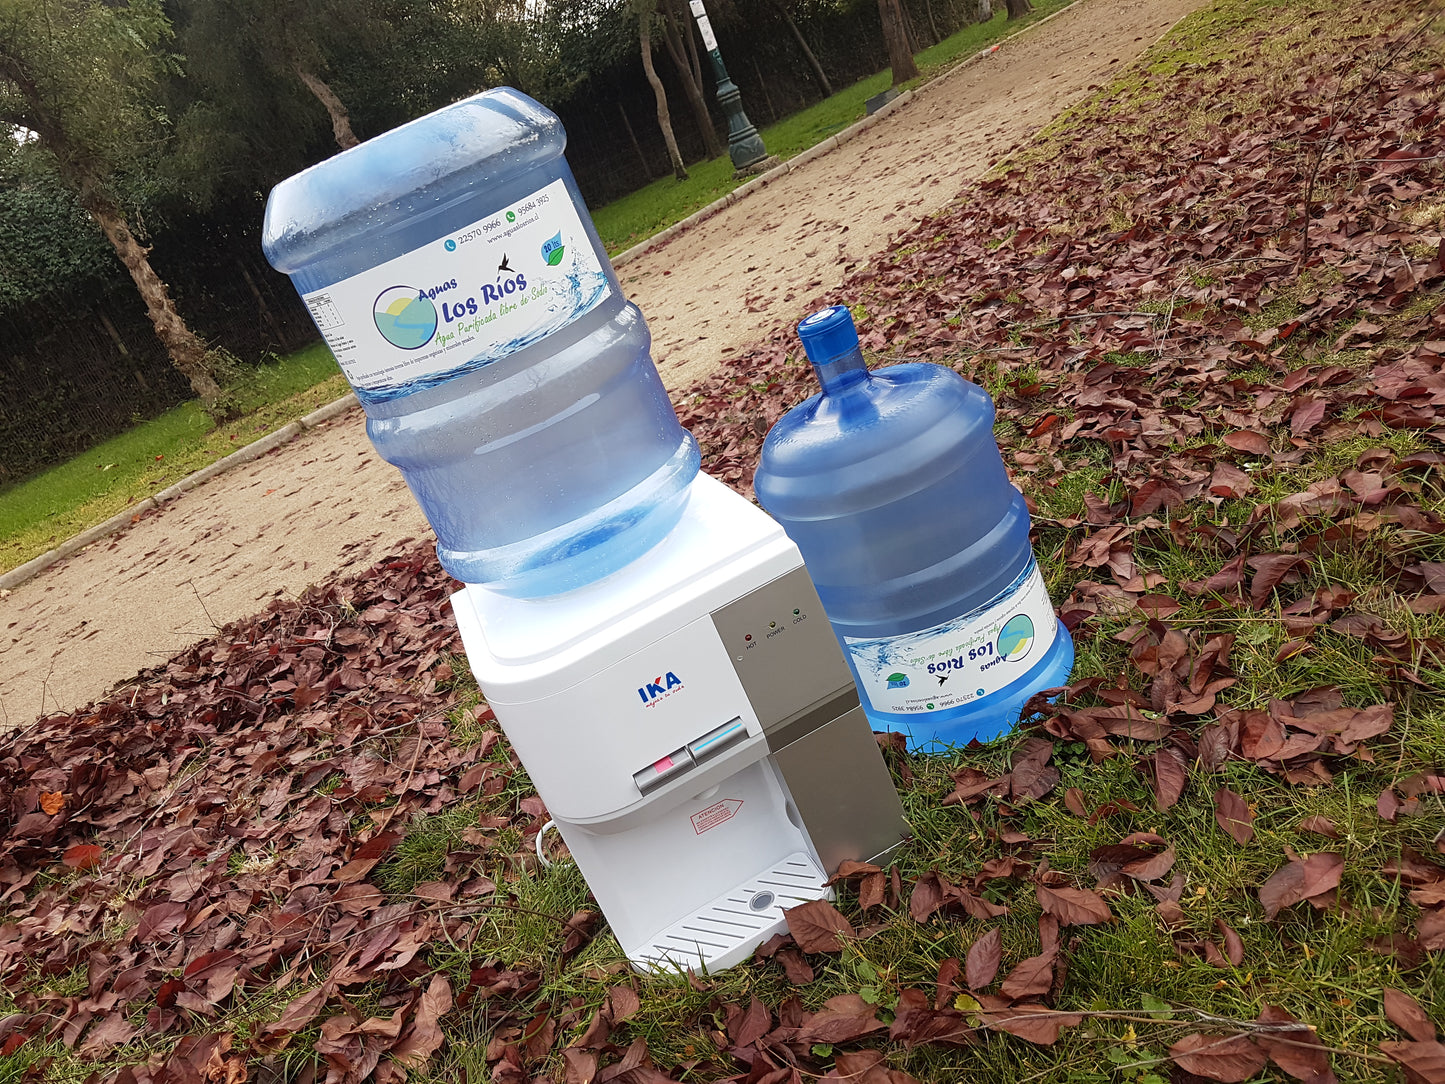 Plan de agua purificada - Aguas Los Rios Home Edition